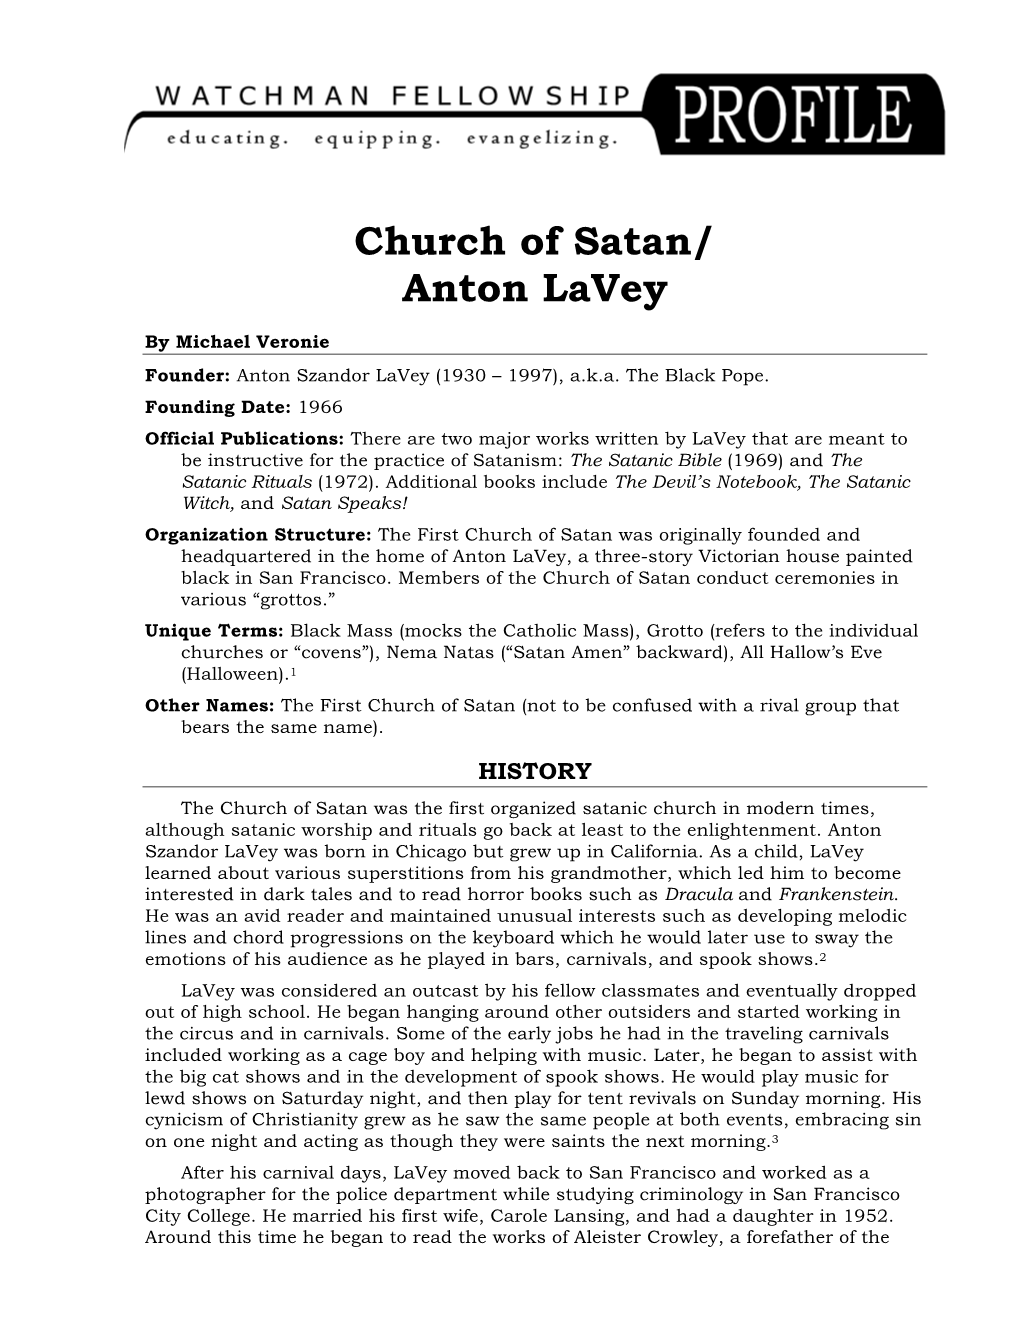 The Church of Satan / Anton Lavey